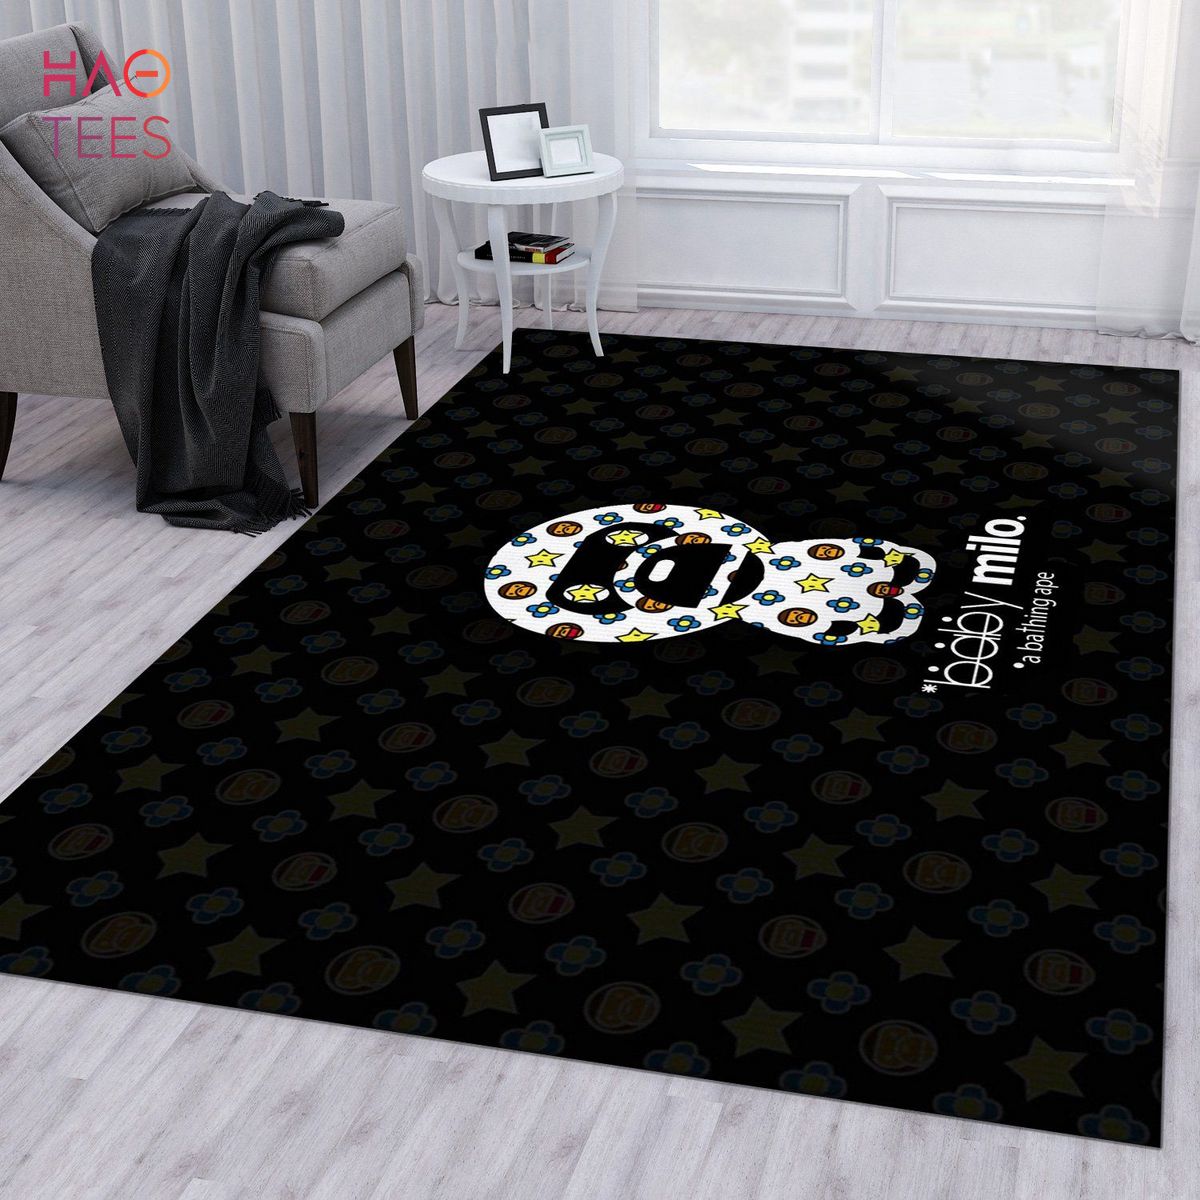 Bape Fashion Brand Area Rugs For Living Room Rectangle Rug Bedroom